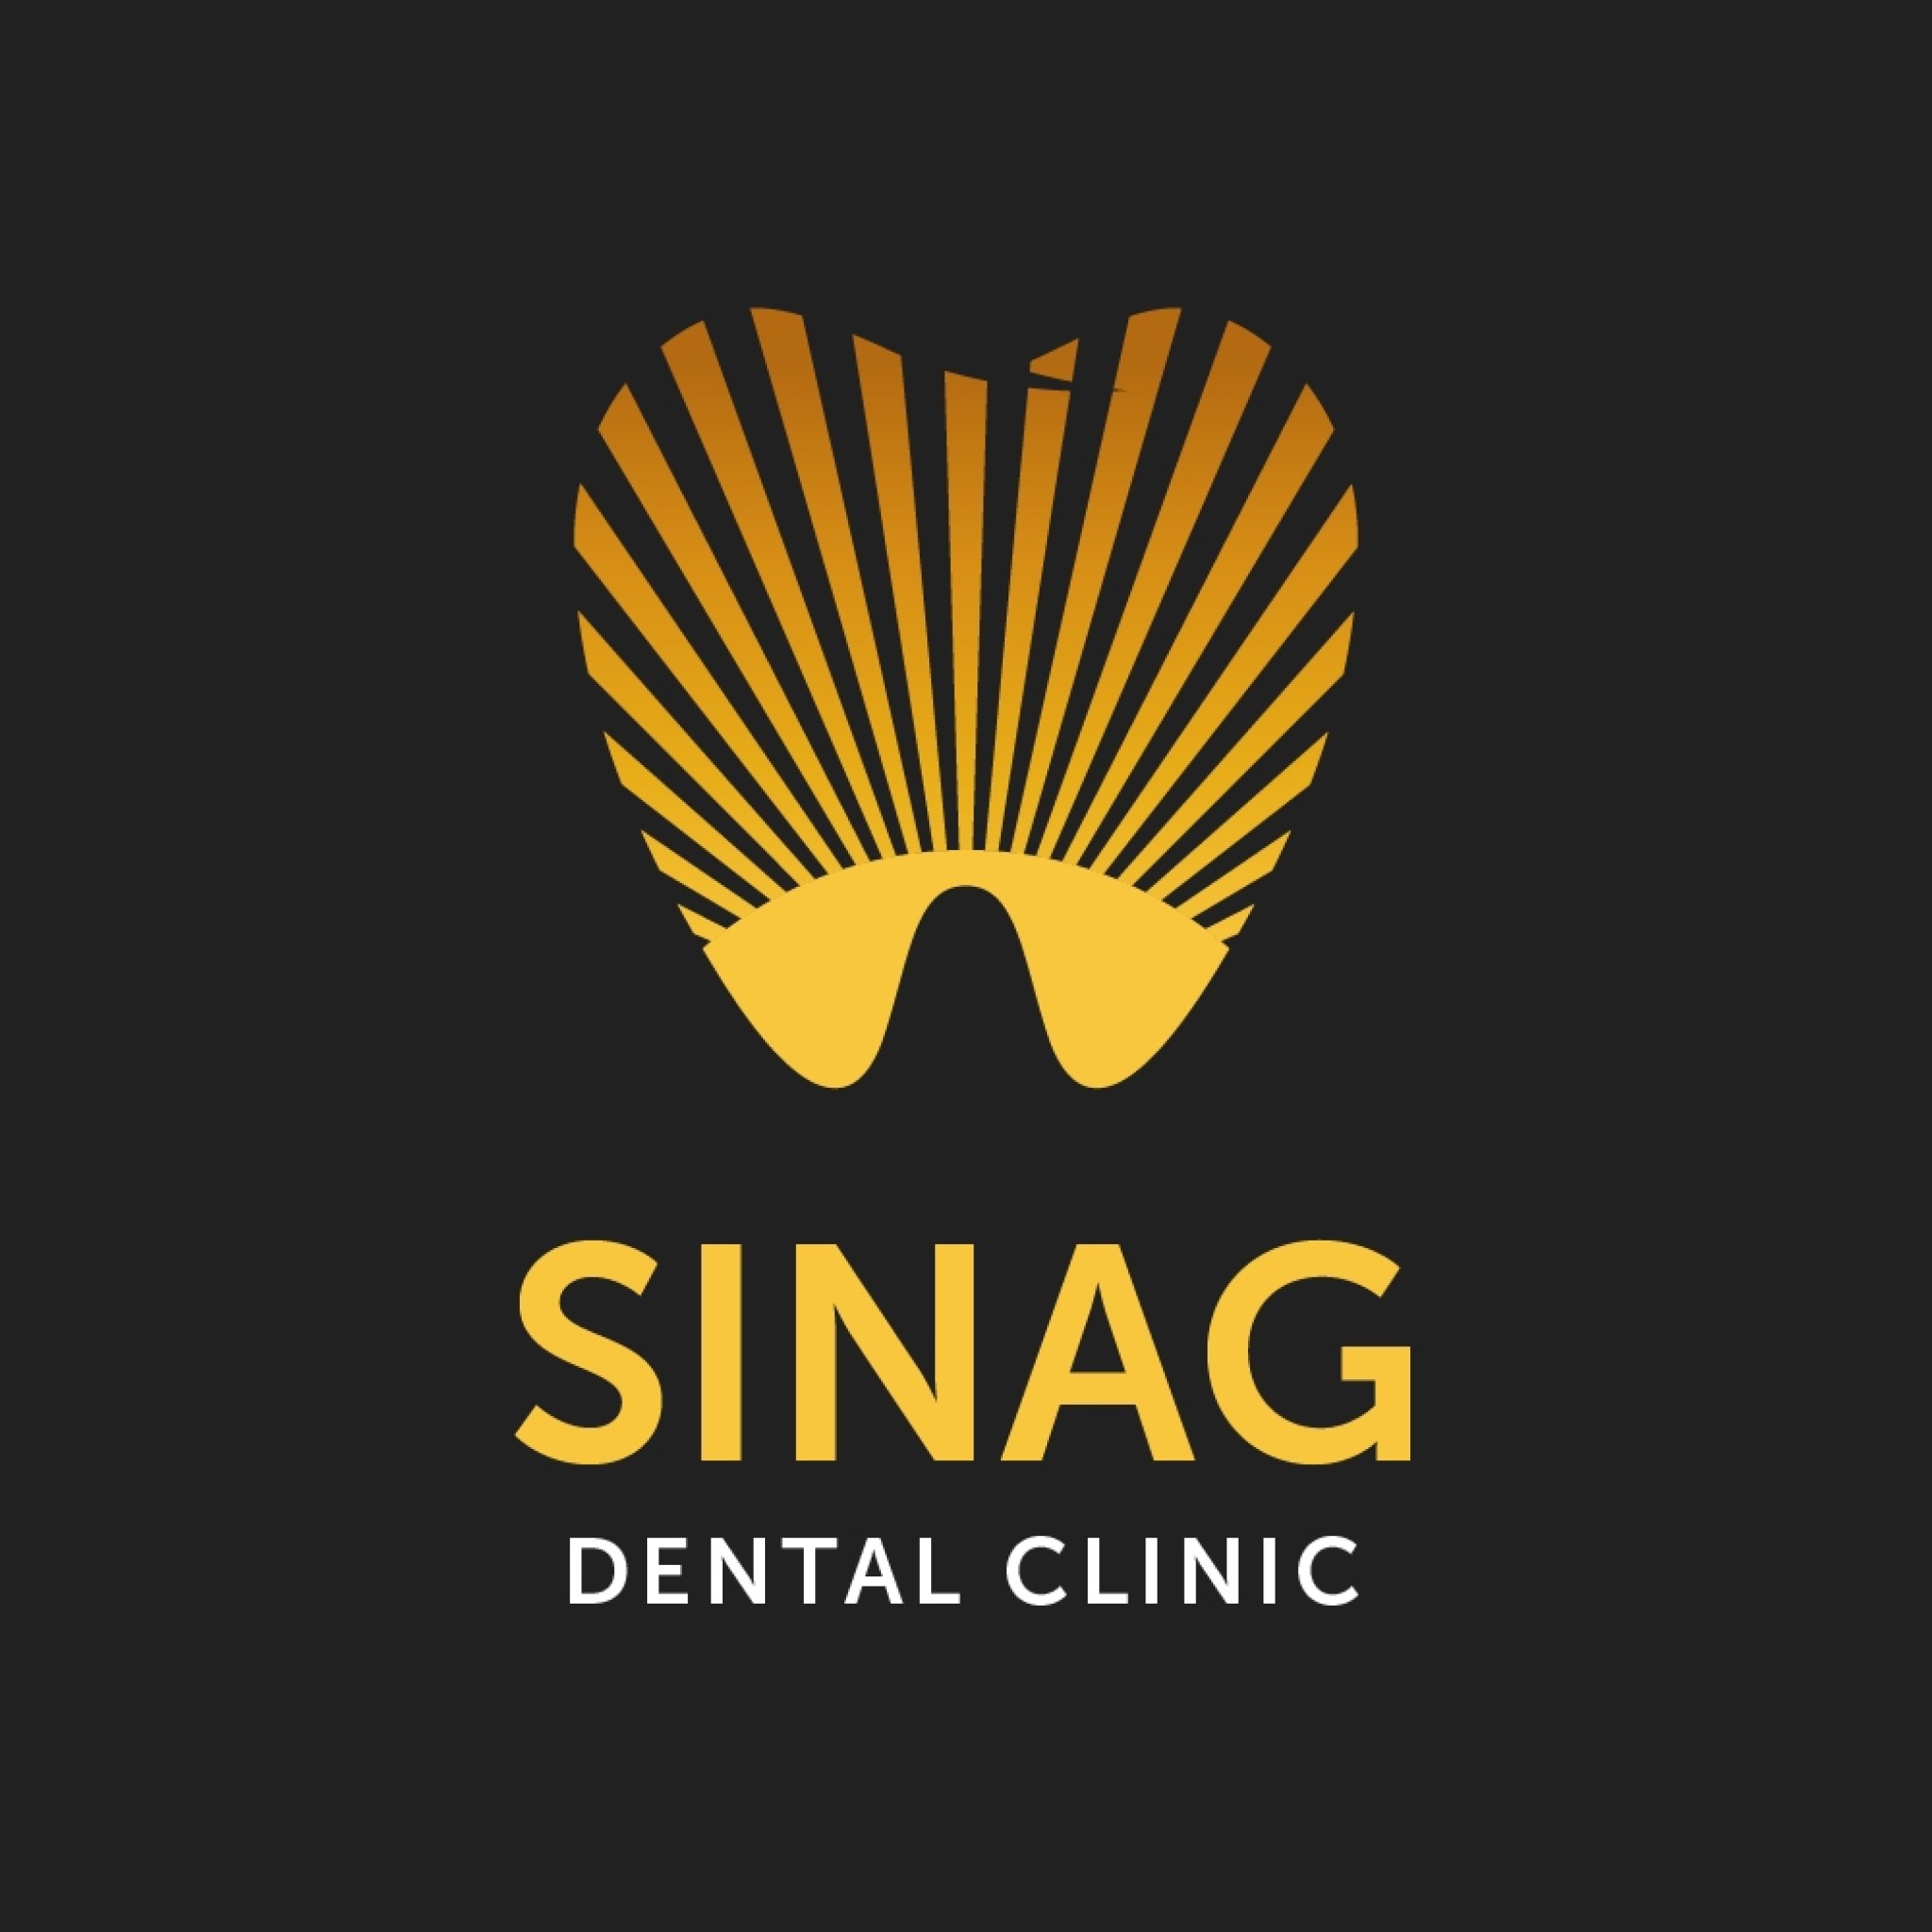 Sinag Dental Clinic